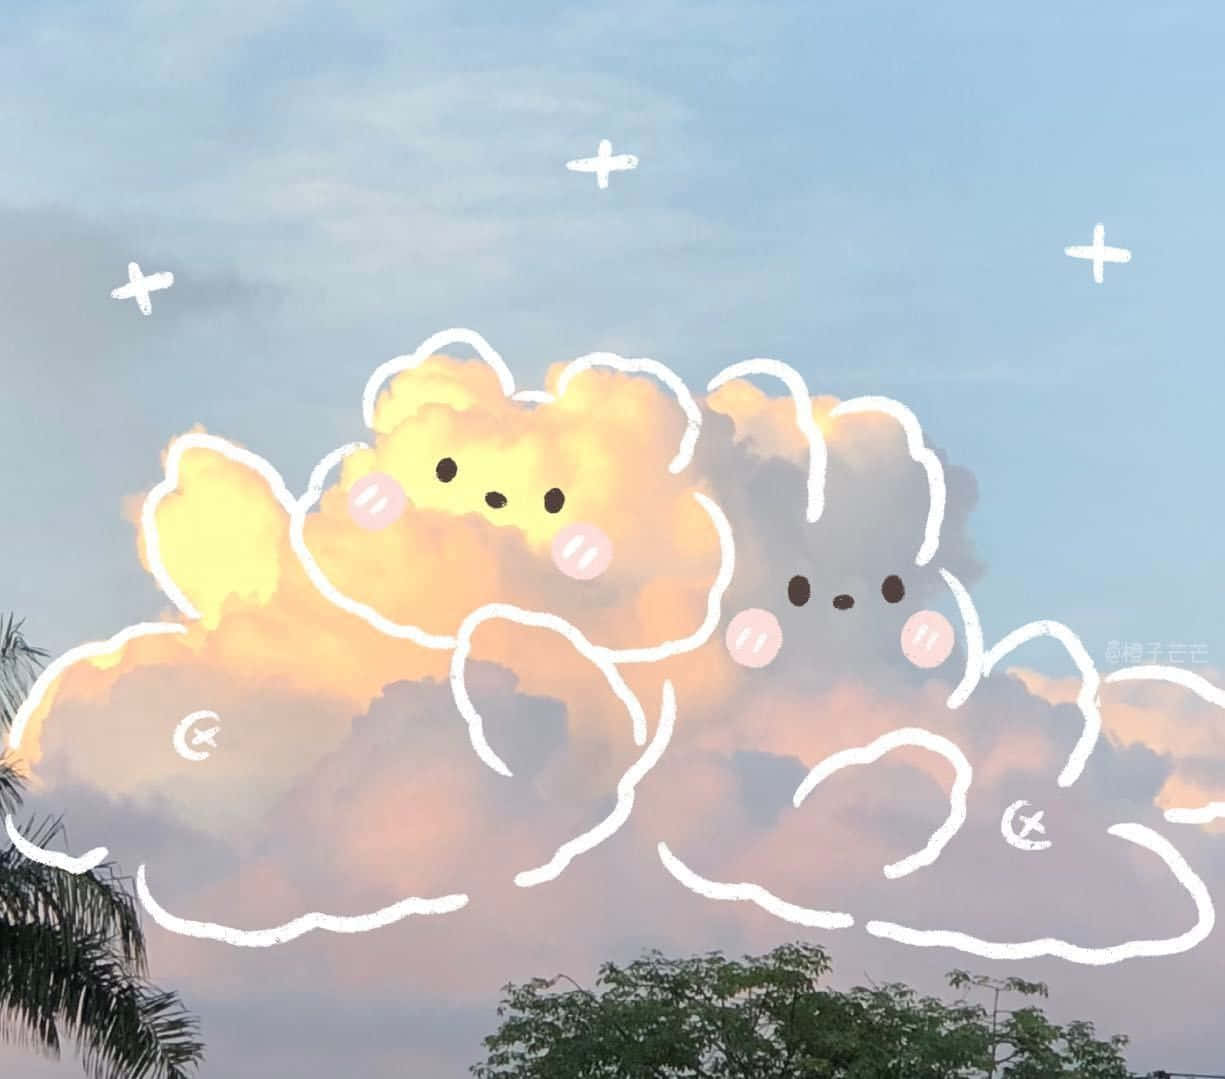 Cute Cloud Shaped Like Bears Wallpaper